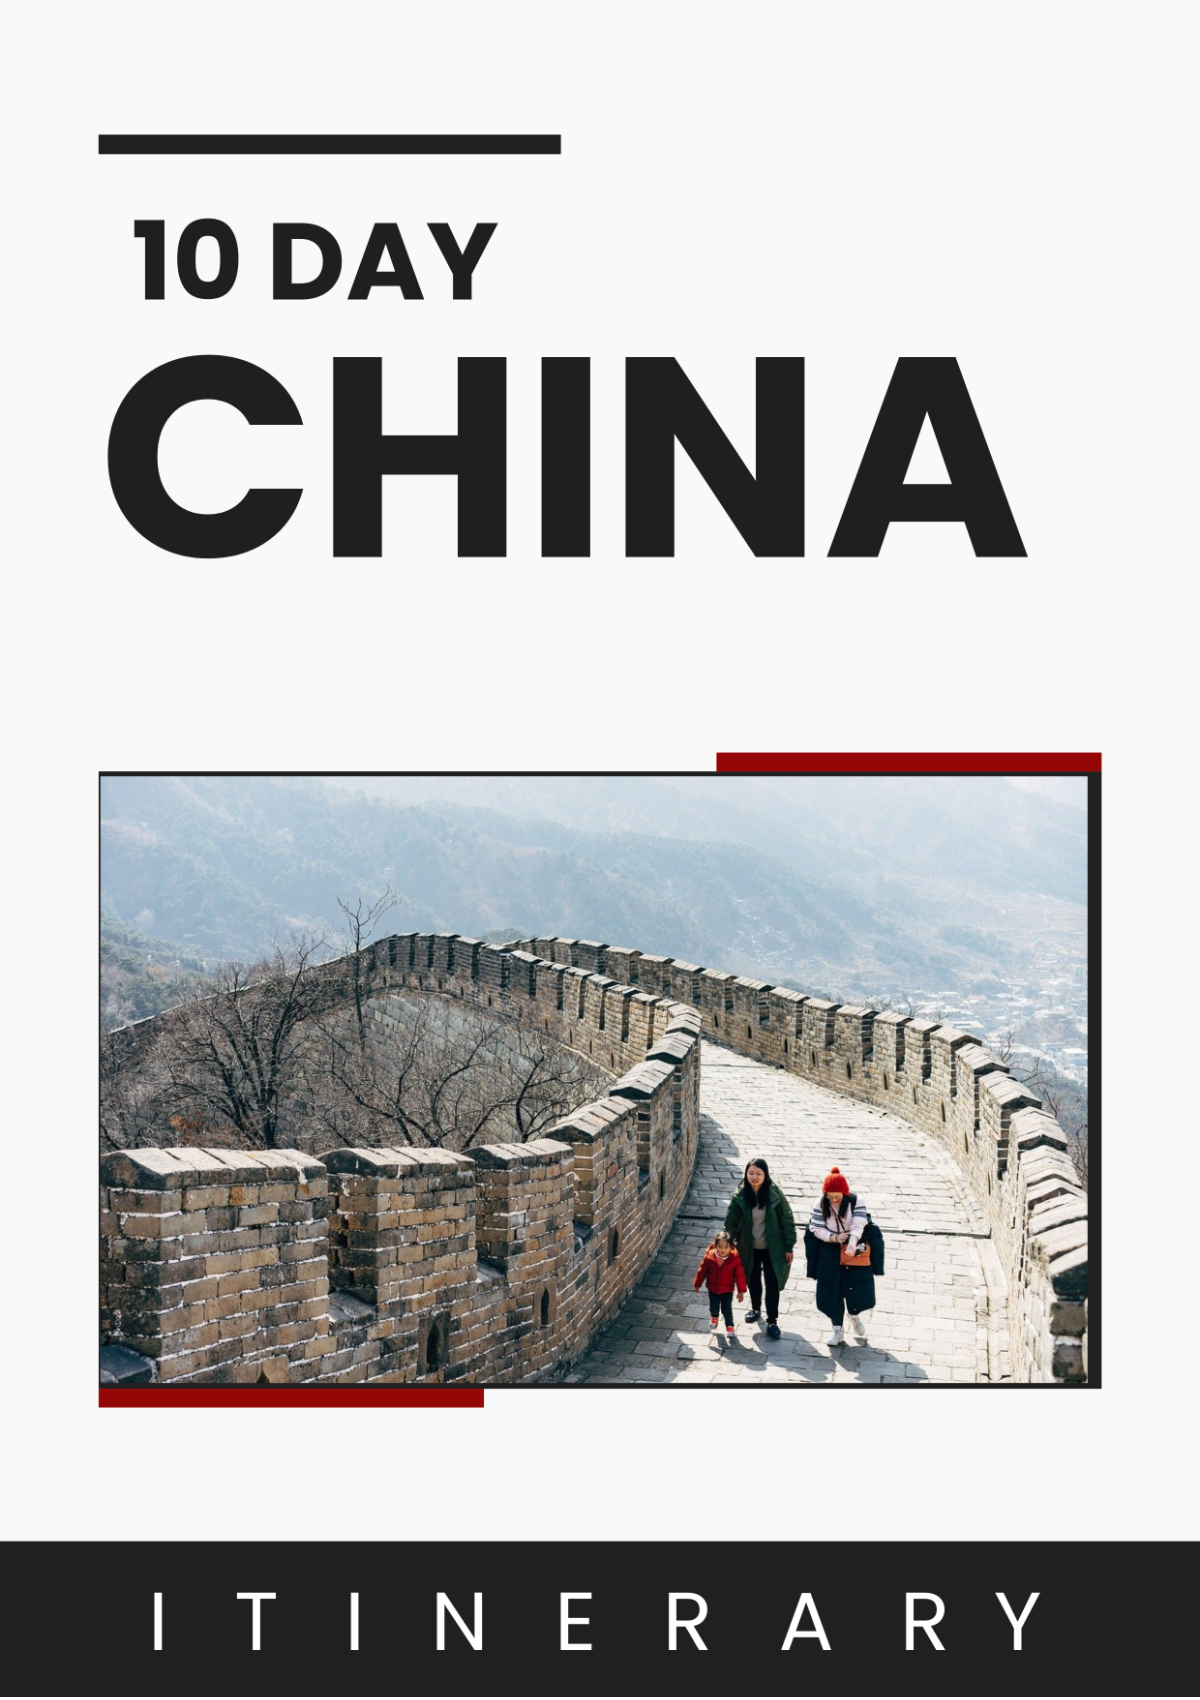 10 Day China Itinerary Template